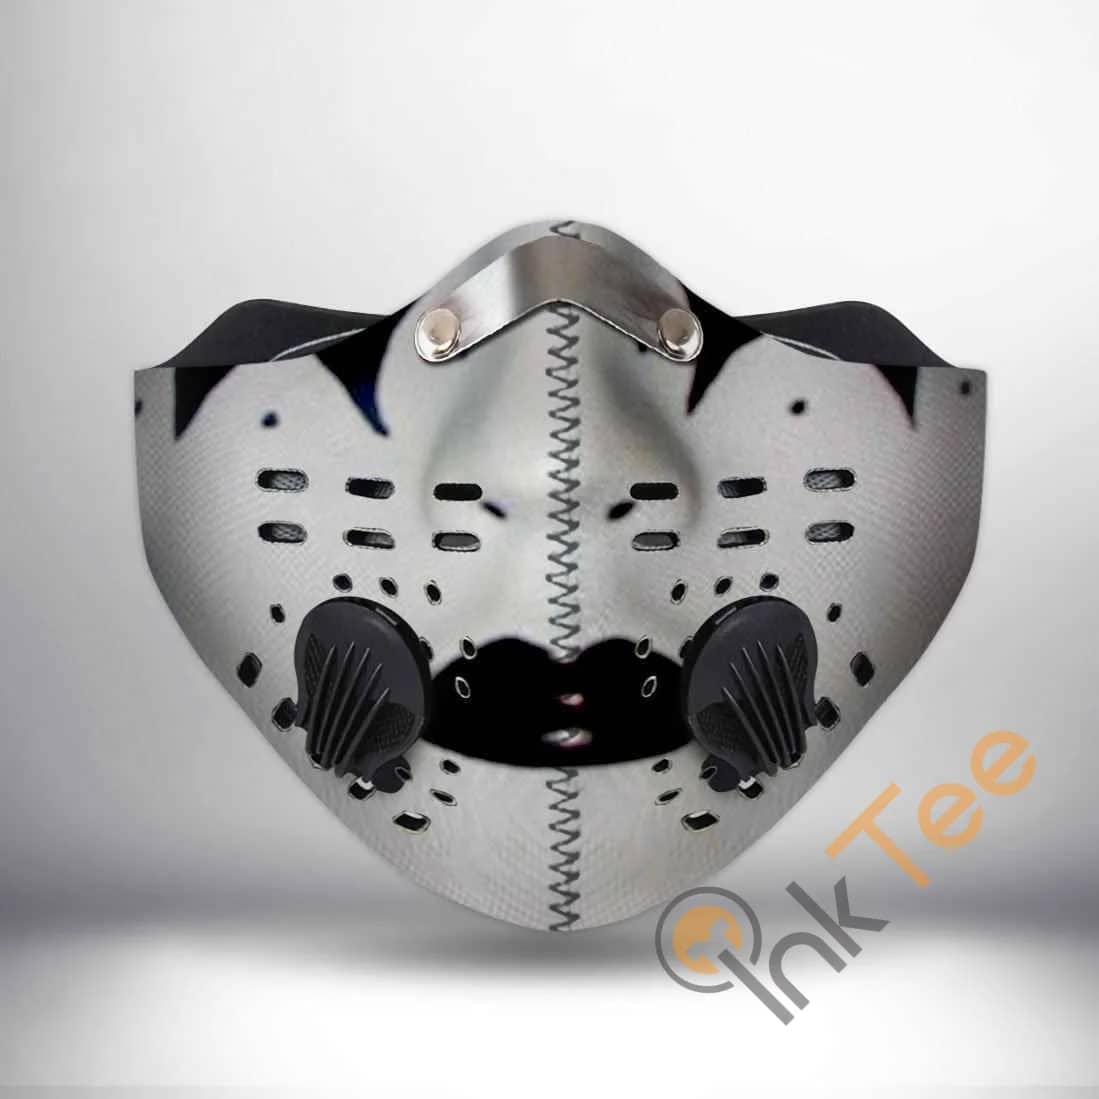 Skull Filter Activated Carbon Pm 2.5 Fm Sku 461 Face Mask